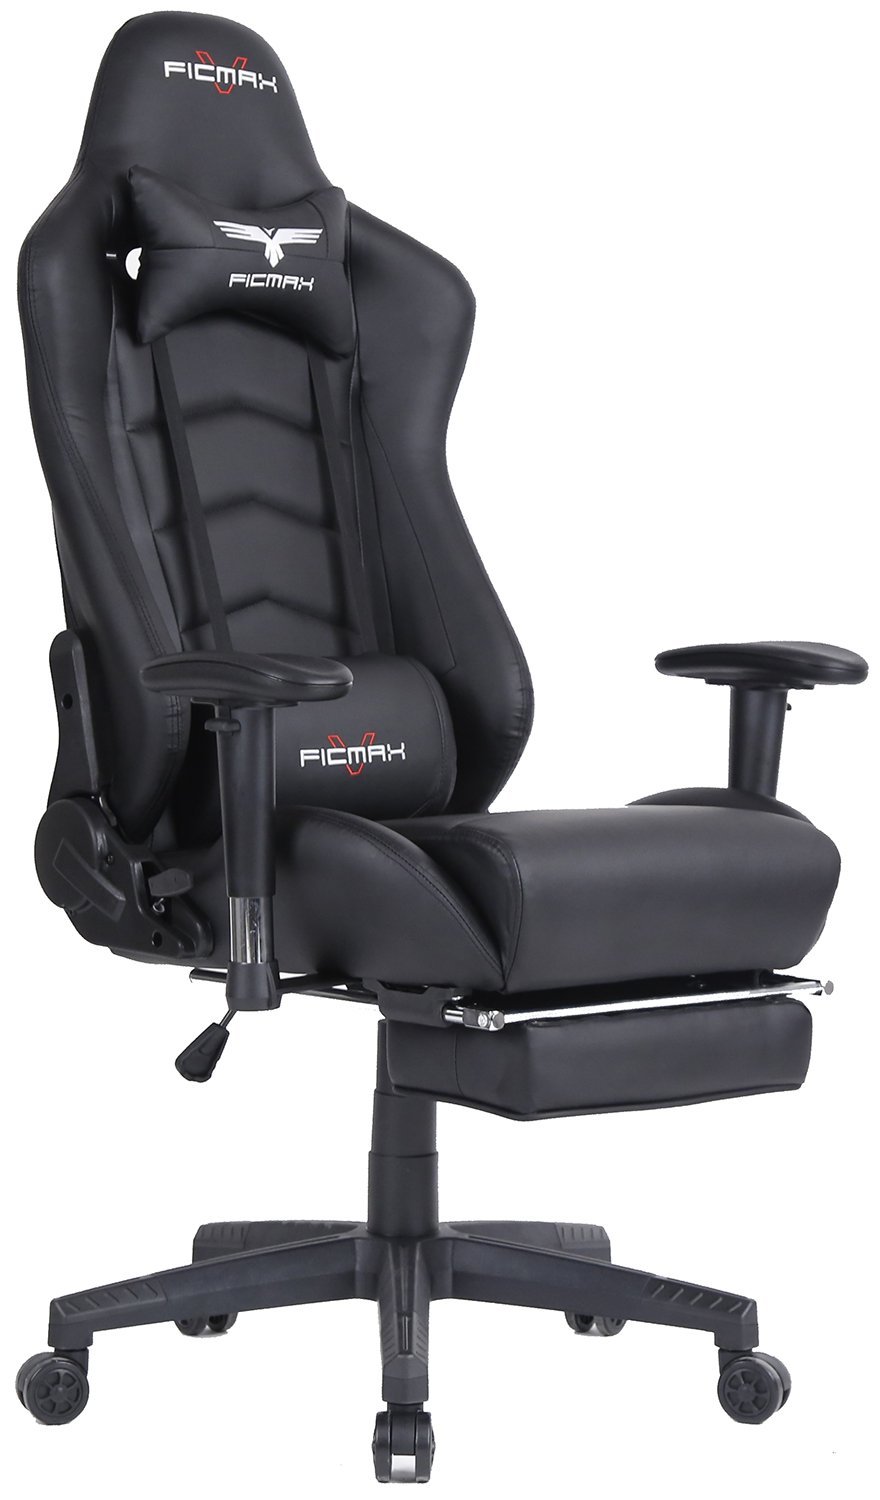 Ficmax Ergonomic High-Back Gaming Chair